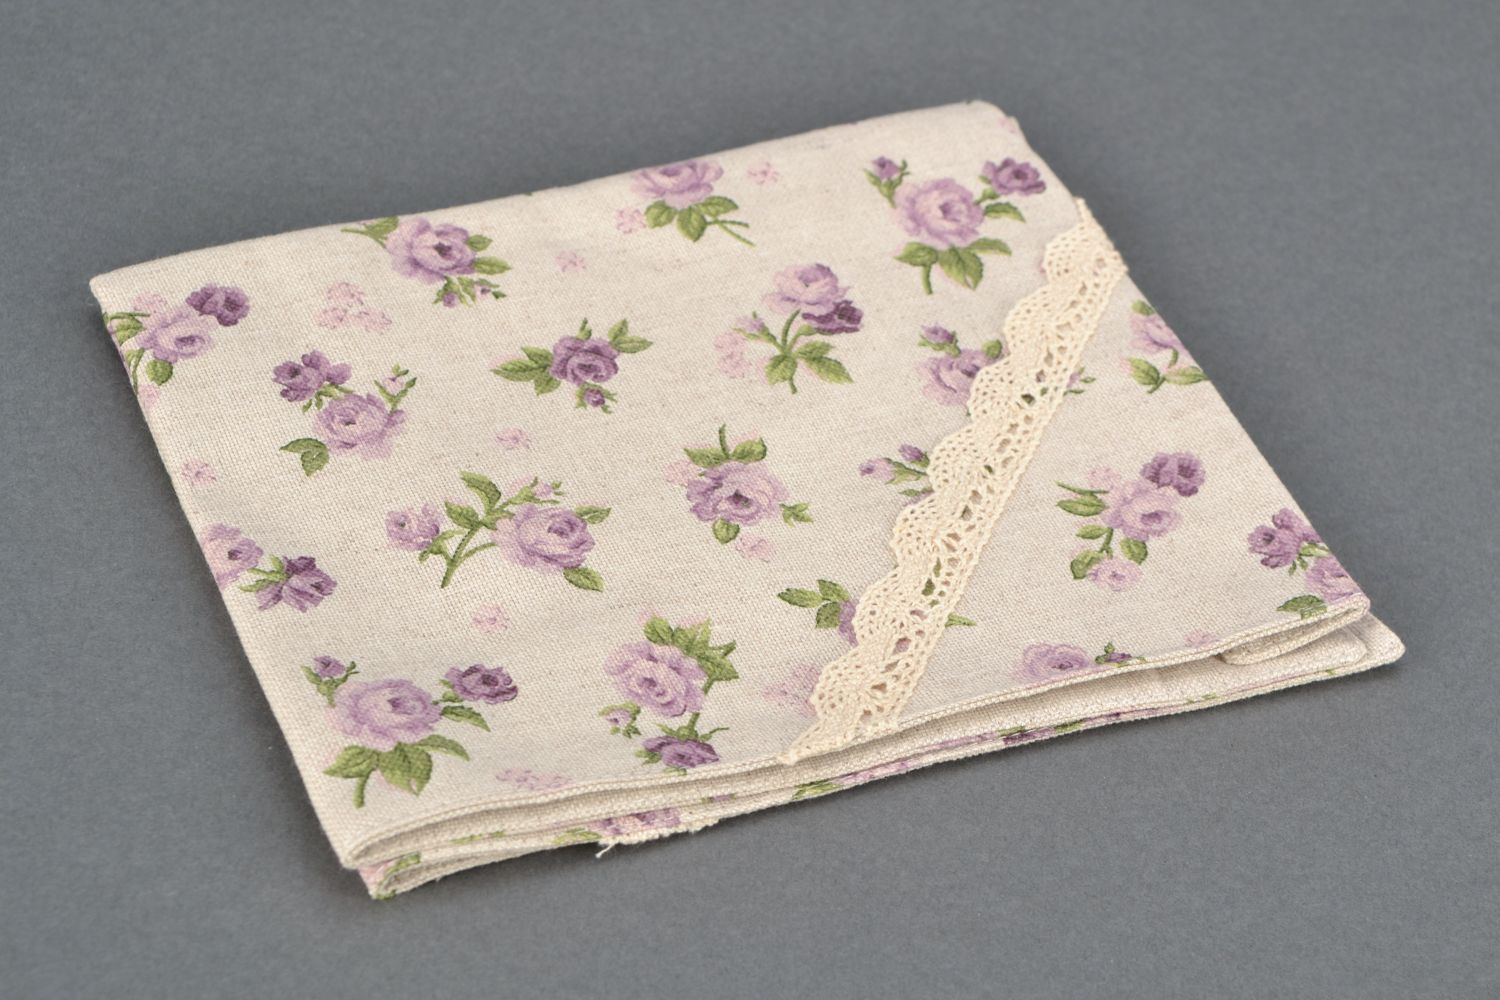 Two-sided handmade decorative fabric napkin photo 3